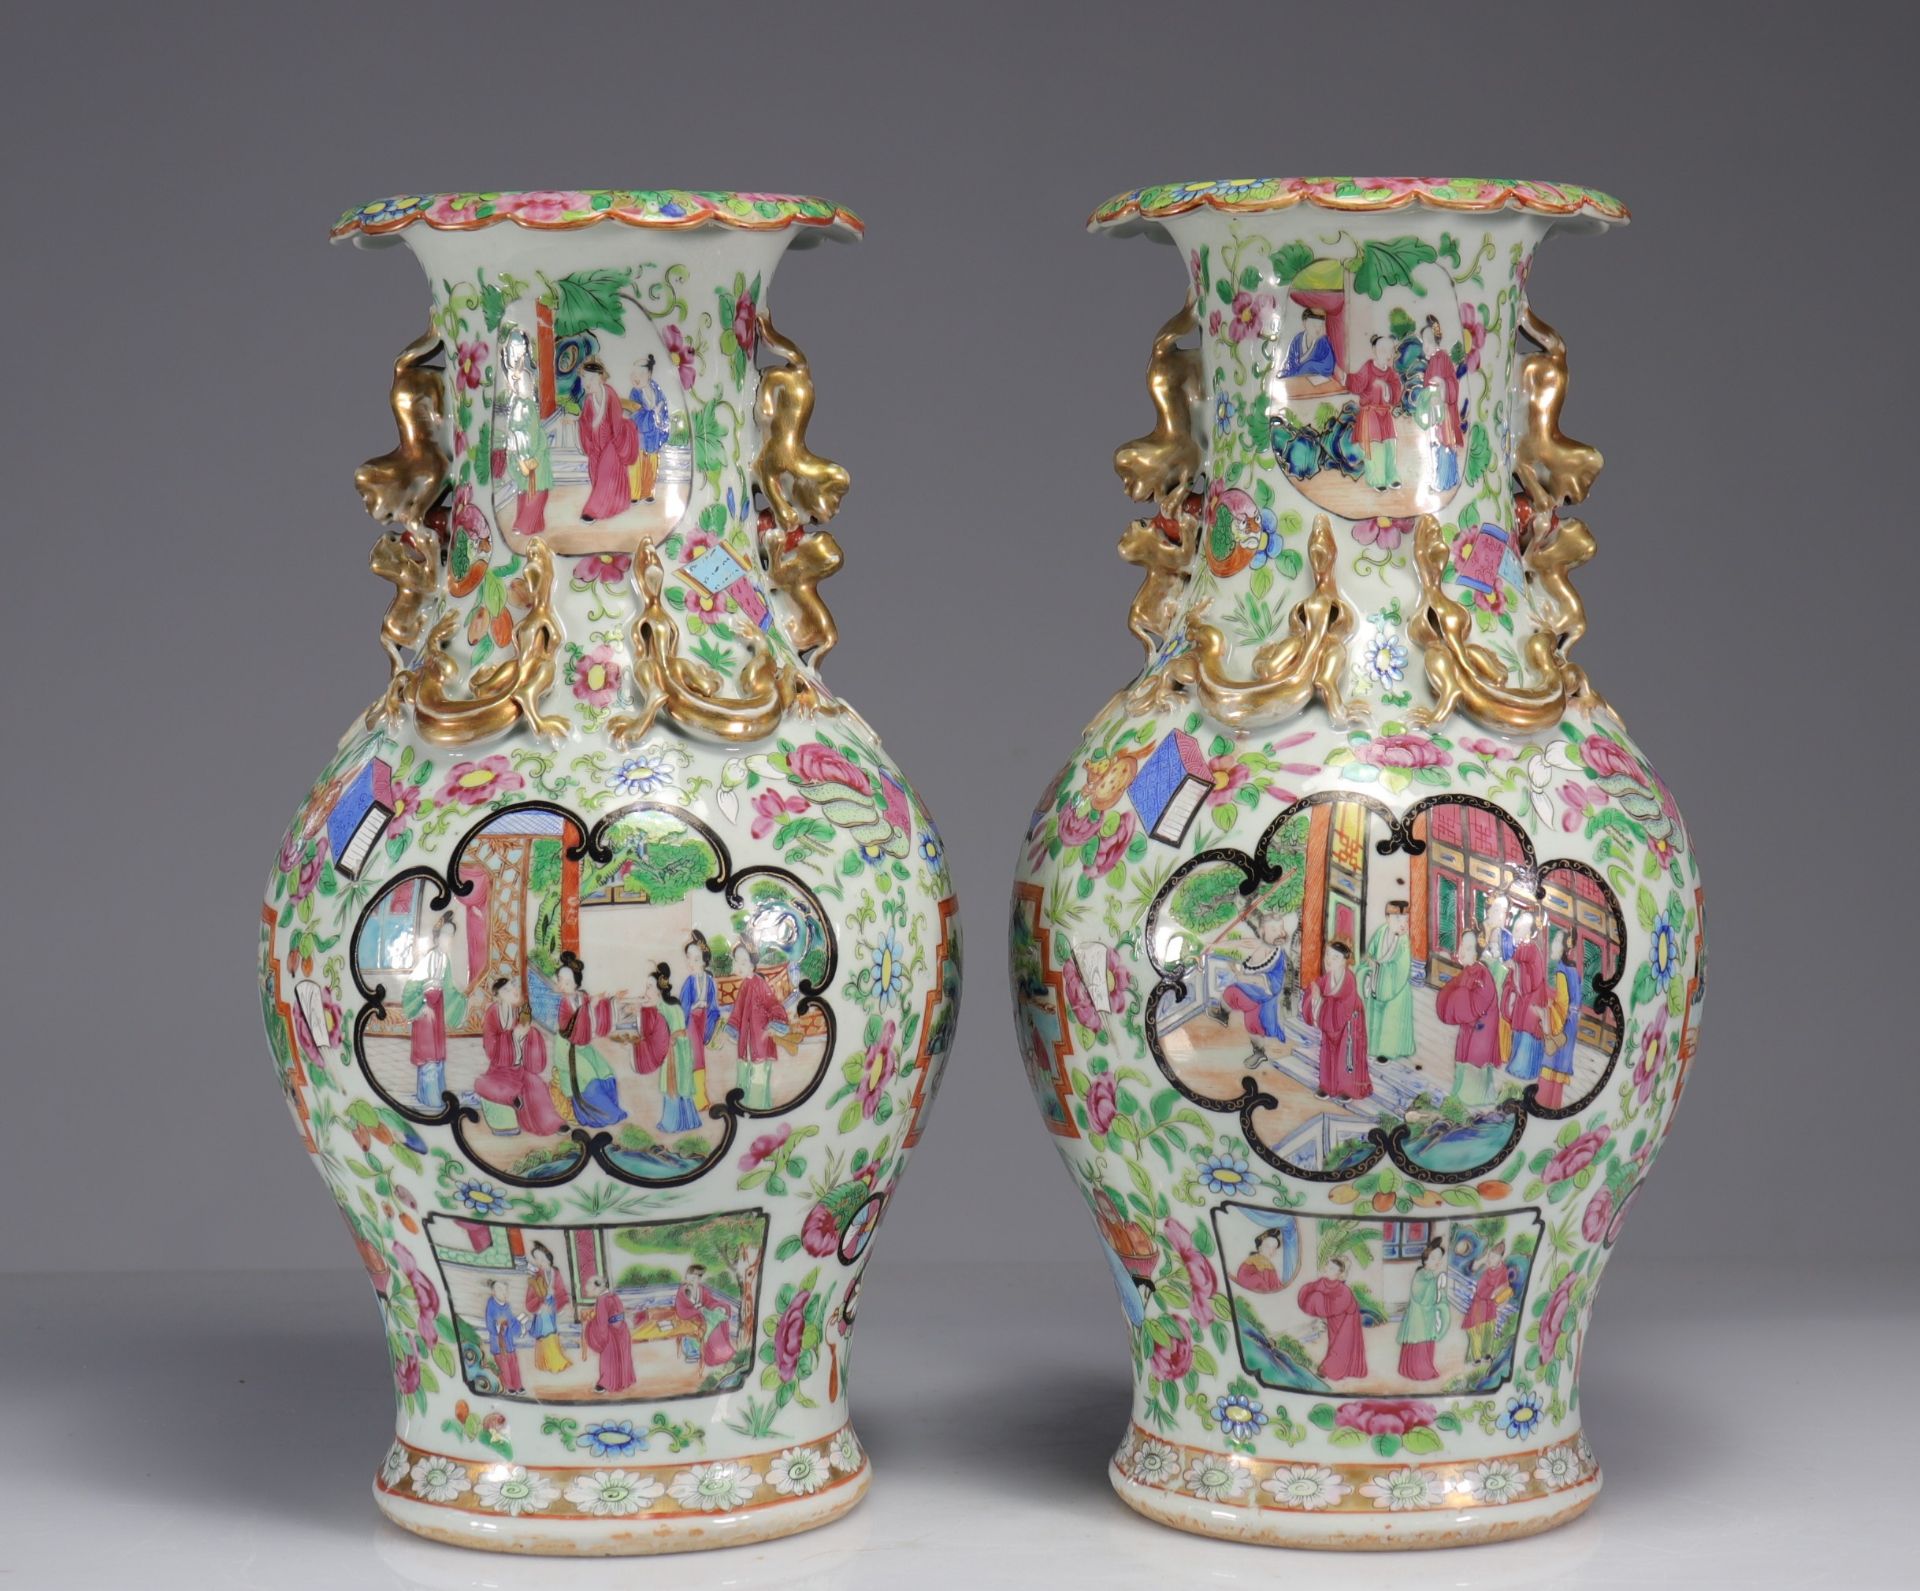 Pair of 19th century Canton porcelain vases